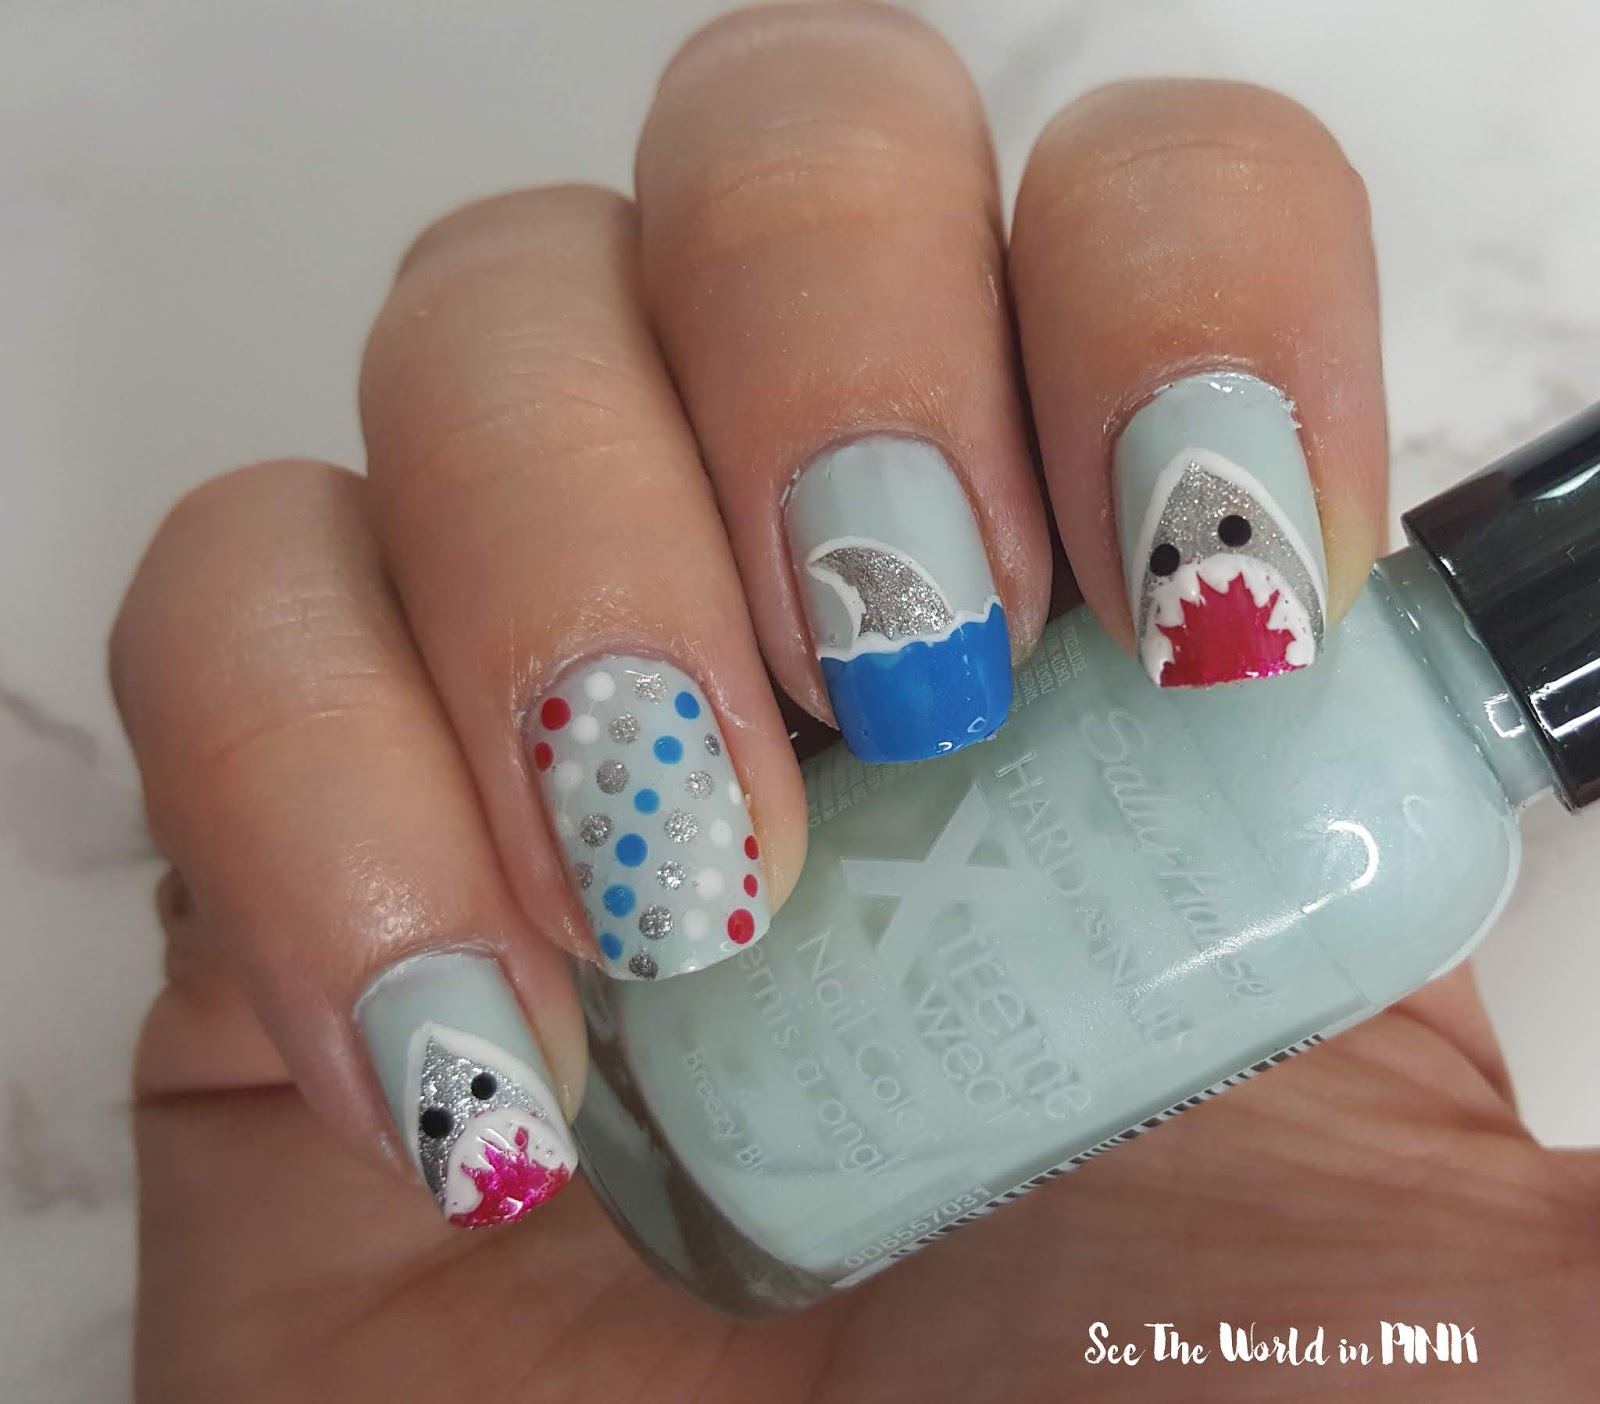 Manicure Monday - Shark Week Nails! 